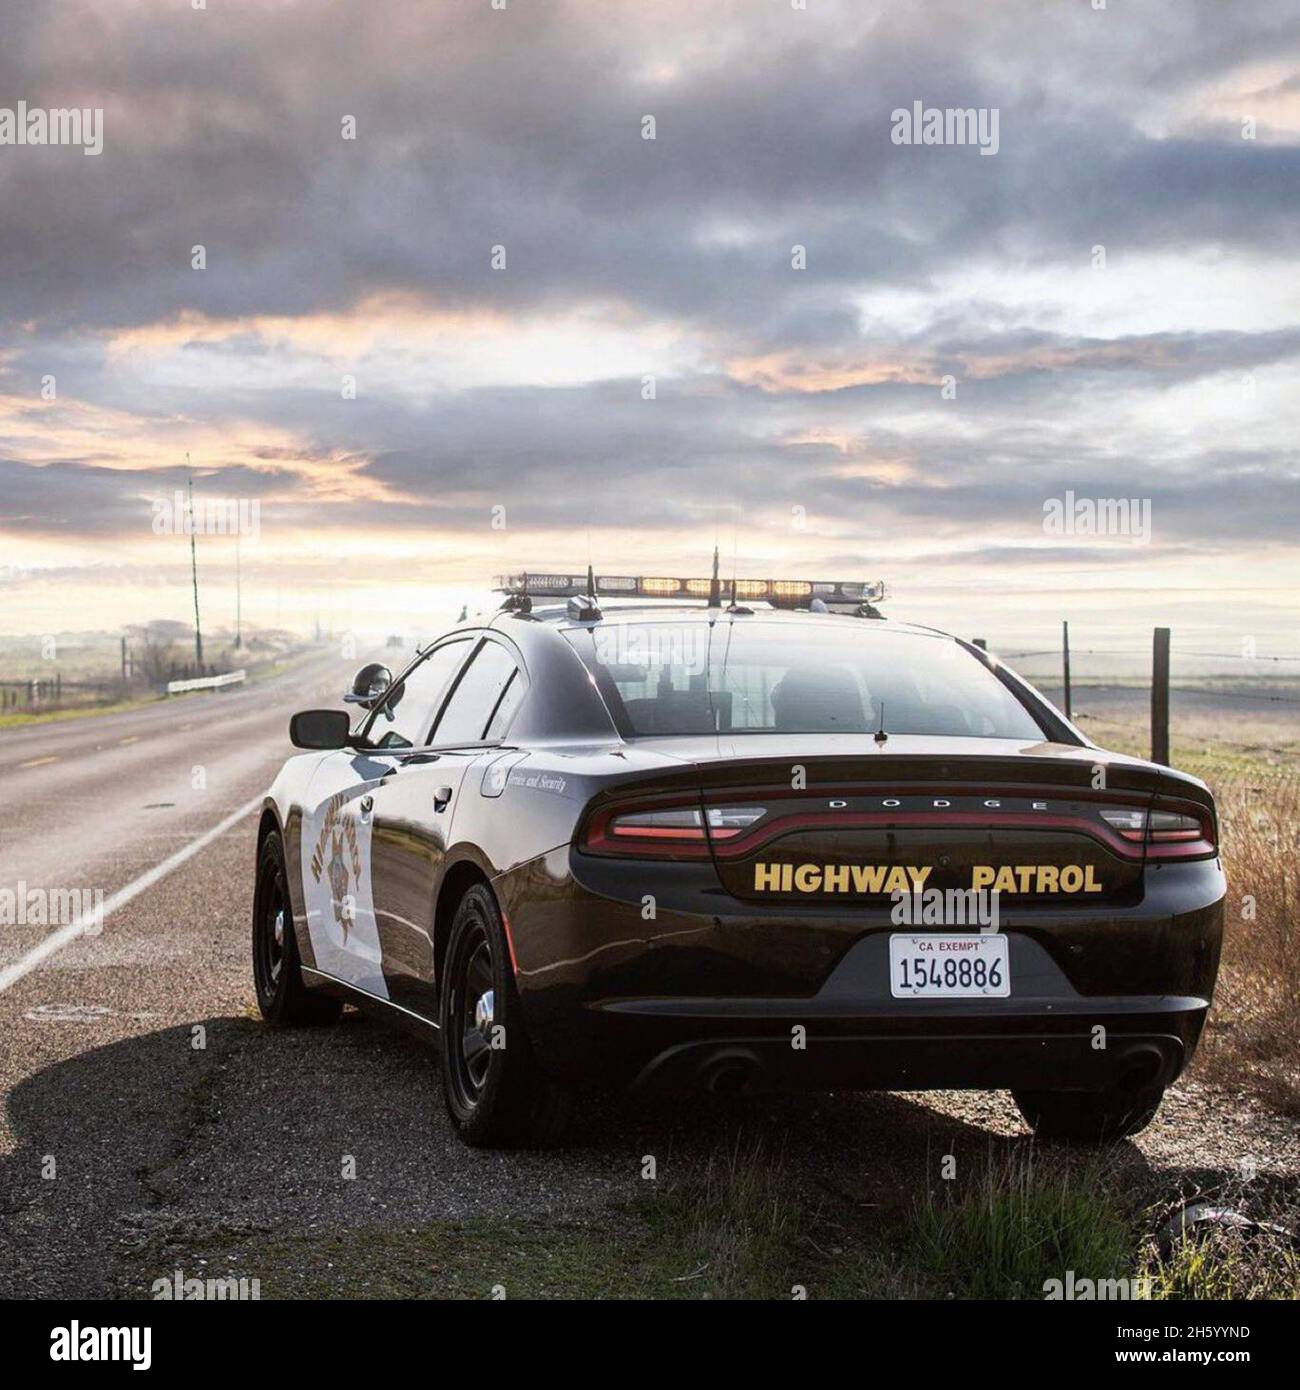 CHP roadside Dodge Charger ca. January 2021 Stock Photo